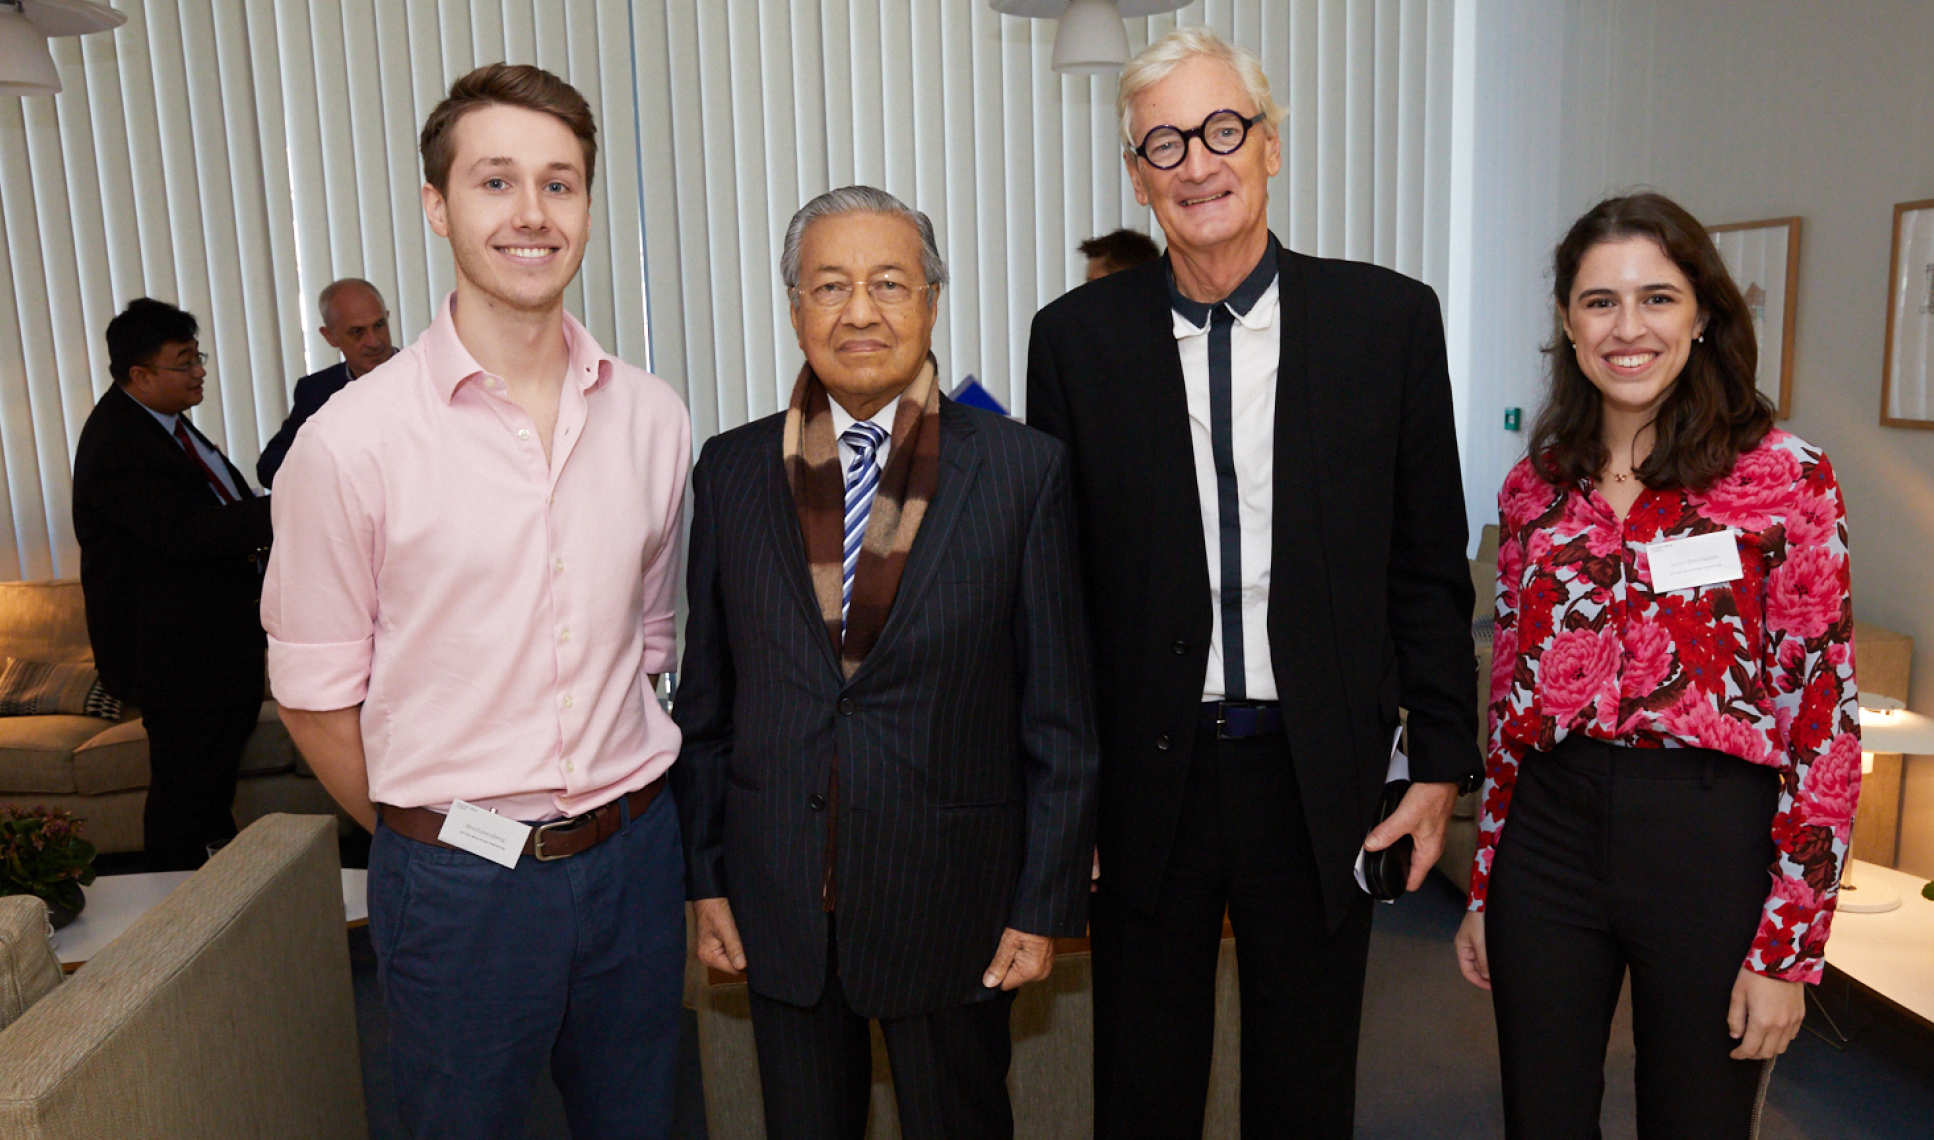 Ben Greenberg, Tun Dr Mahathir bin Mohamad, Sir James Dyson and Anna Bernbaum